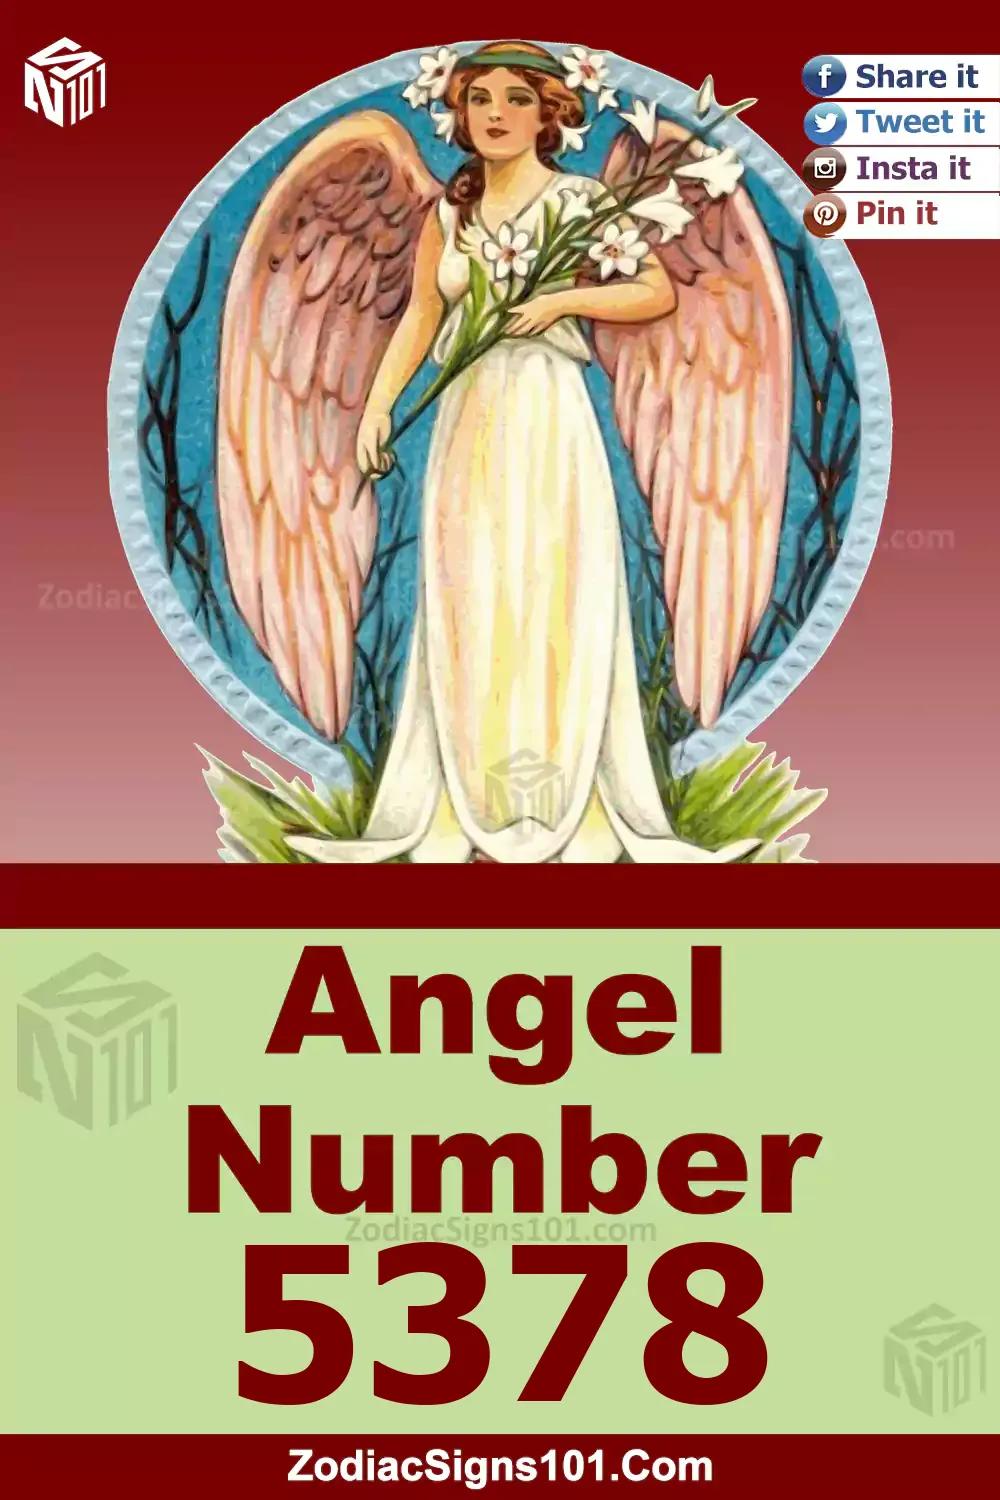 5378-Angel-Number-Meaning.jpg